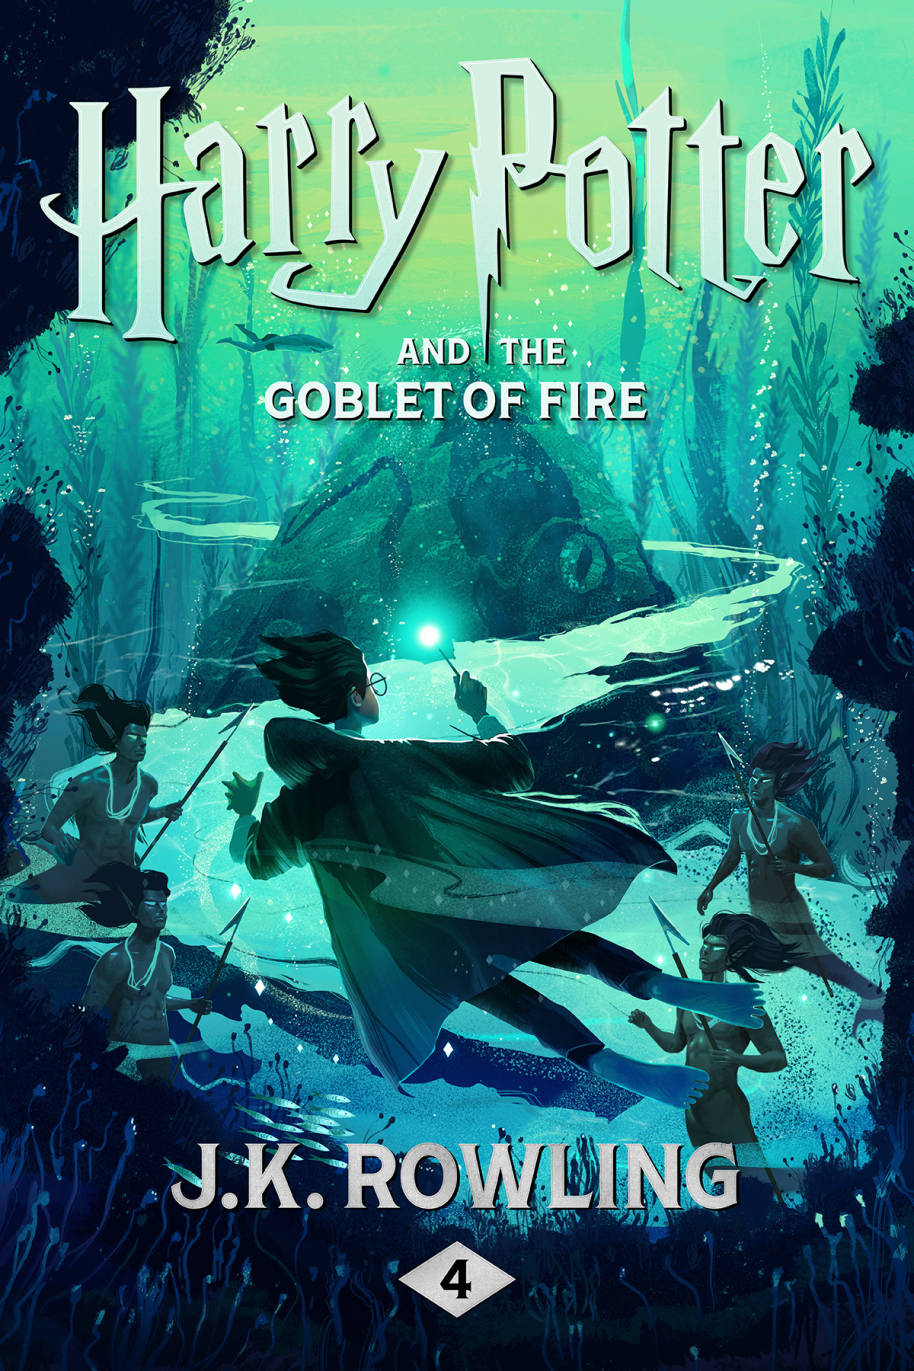 Harry Potter New Covers Sale Store, Save 60 jlcatj.gob.mx